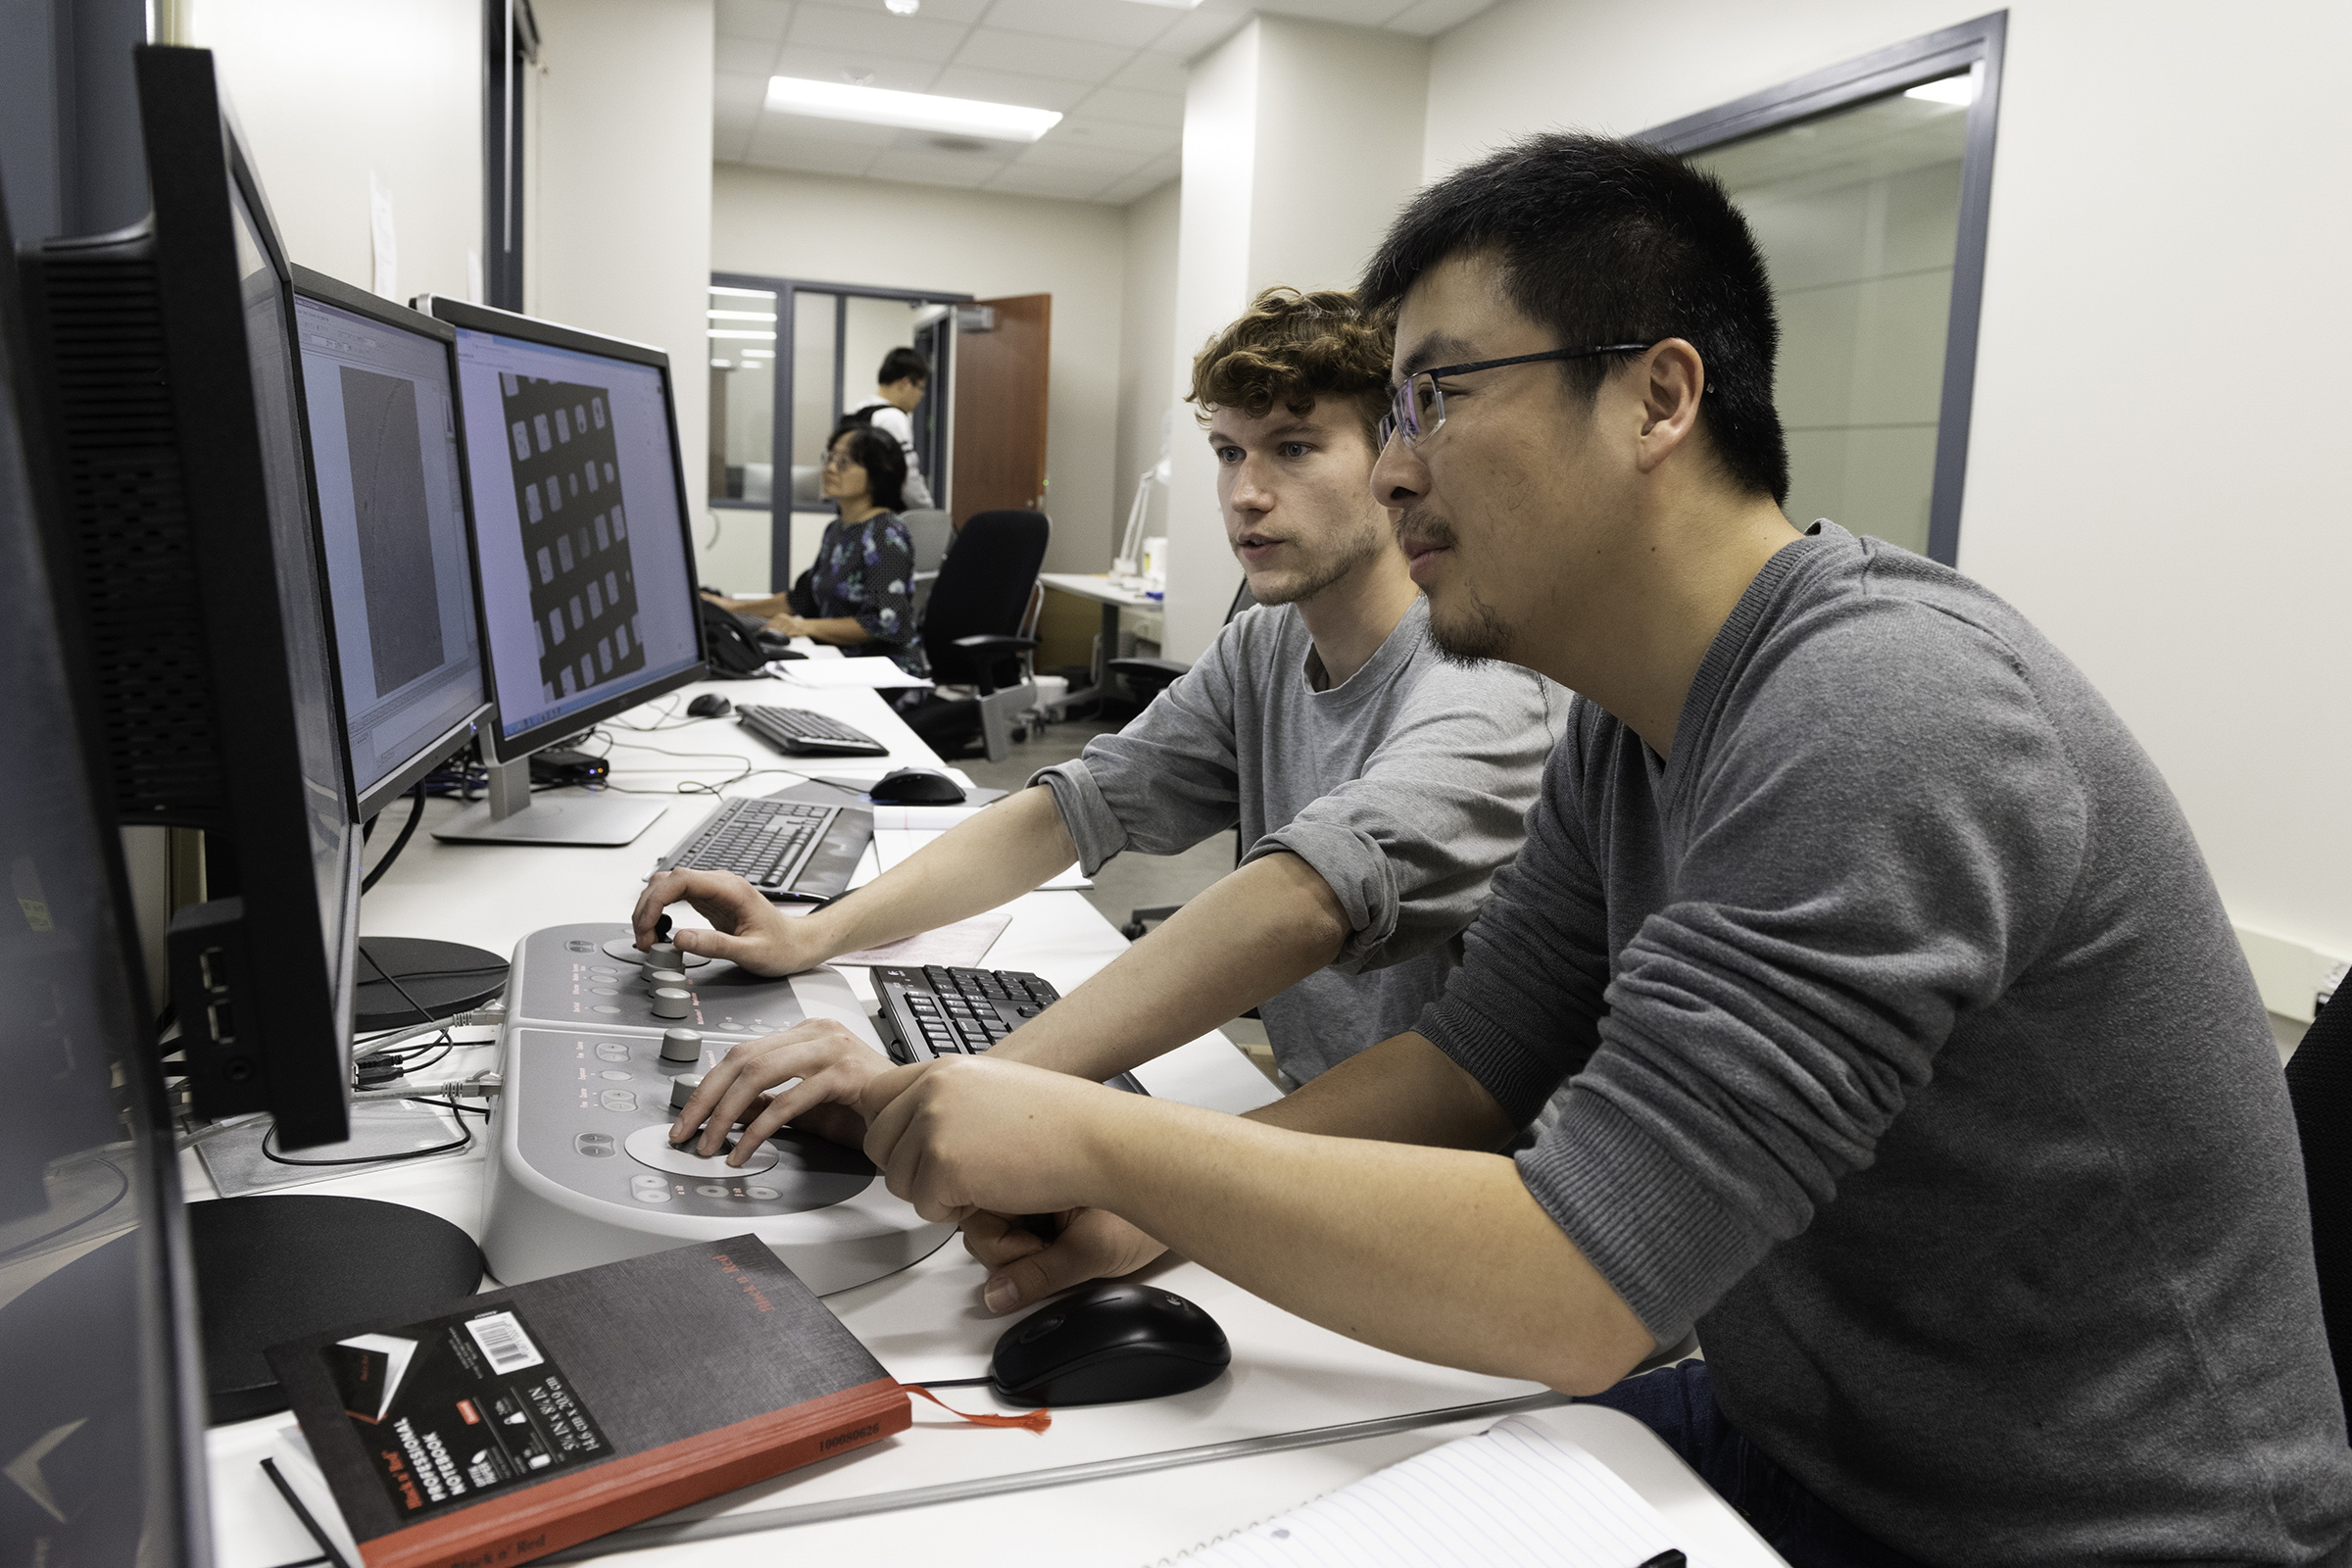 Two students, Nianshuang Wang and Daniel Wrapp, look at data on a computer screen